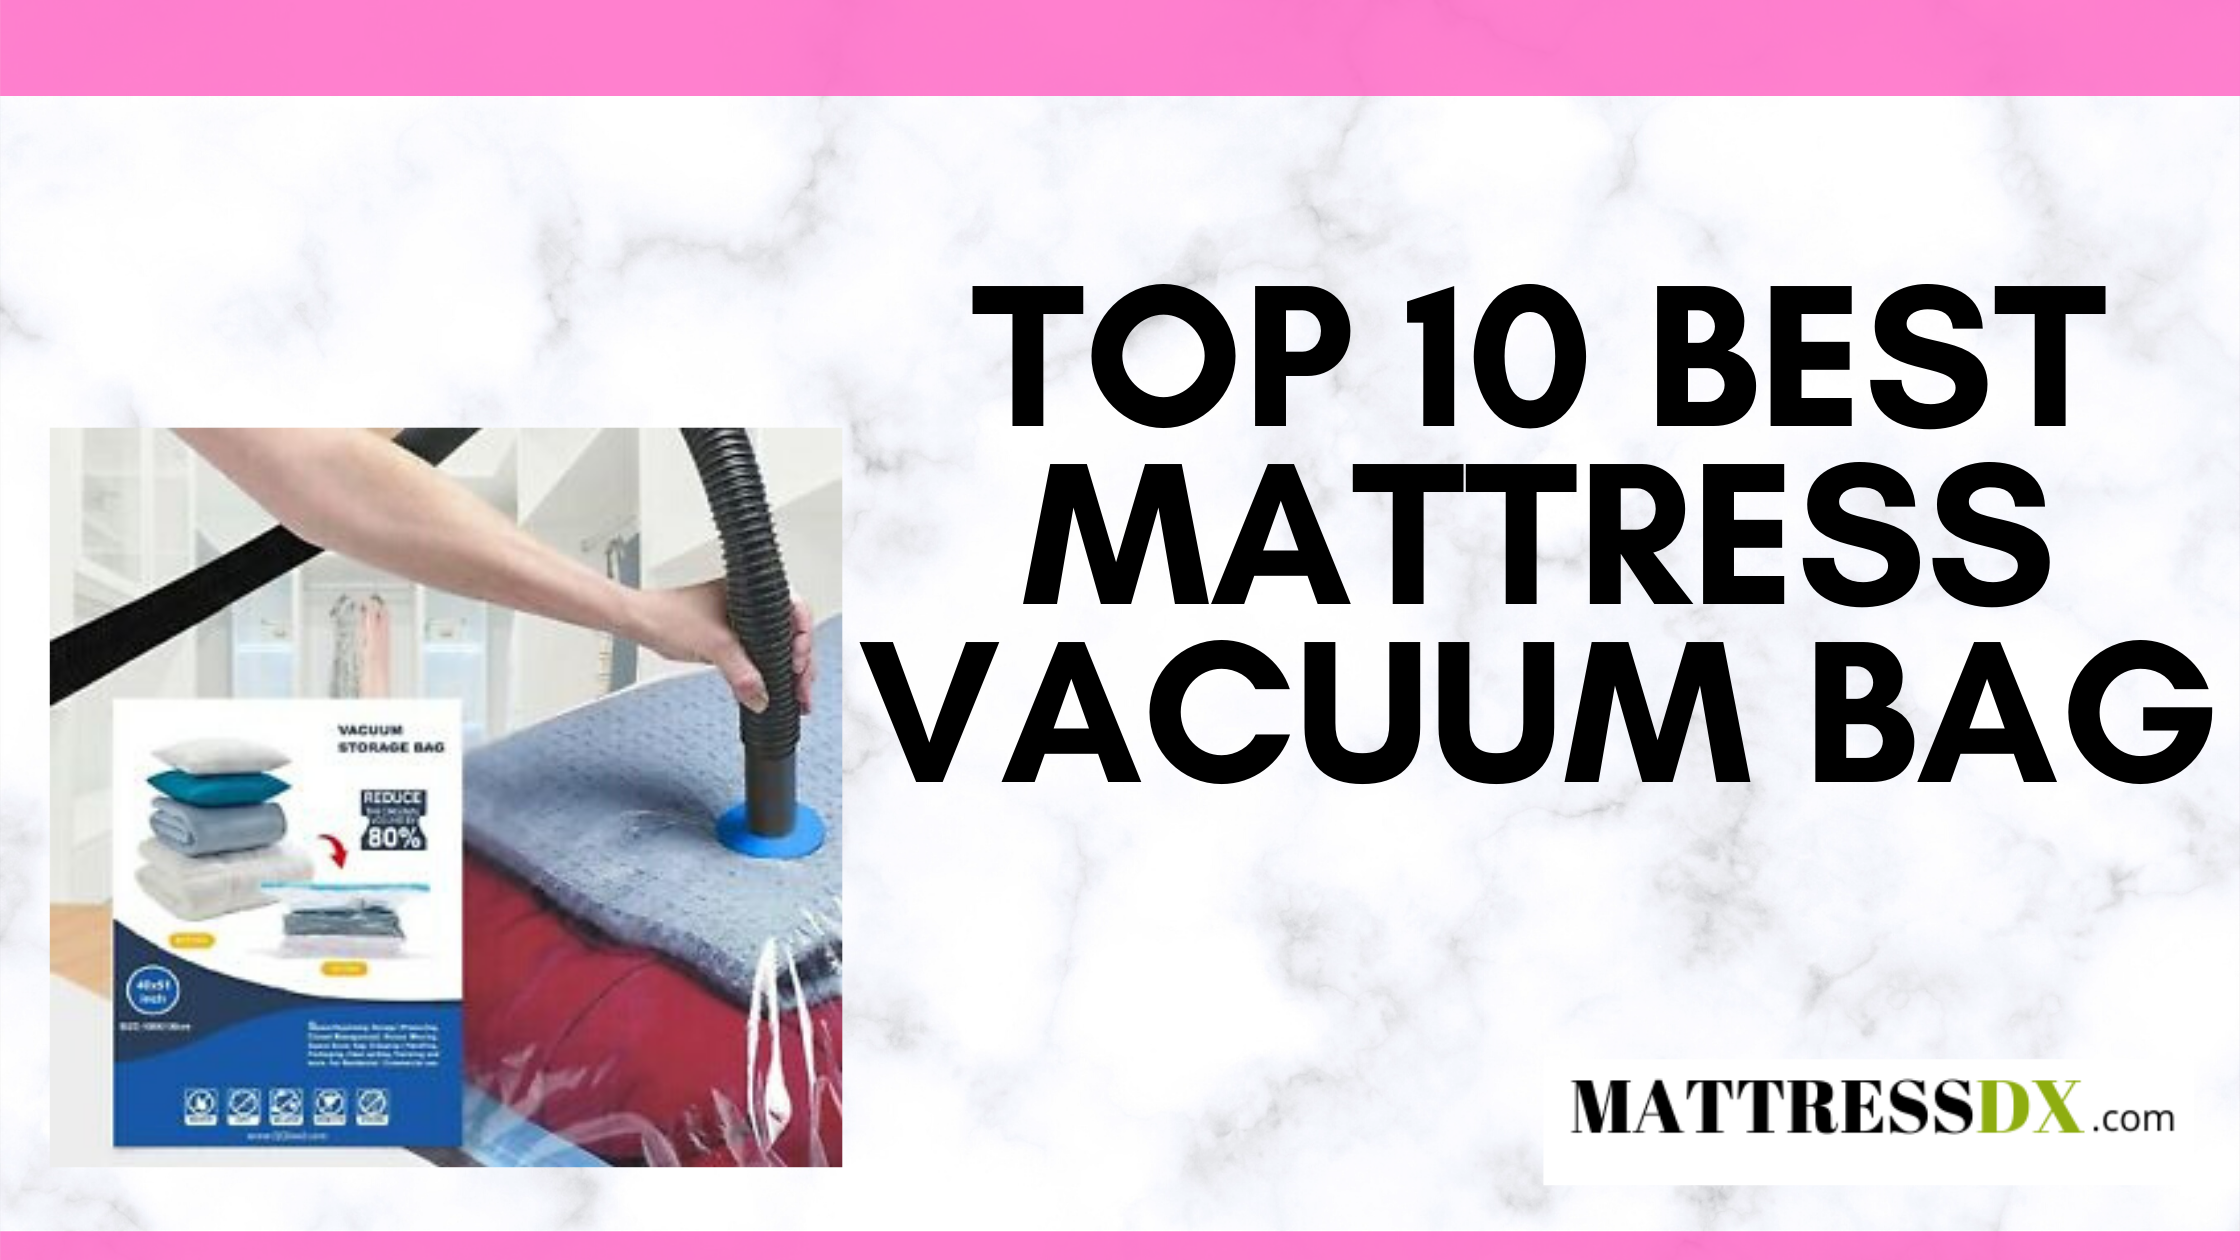 vacuum bag for mattress topper